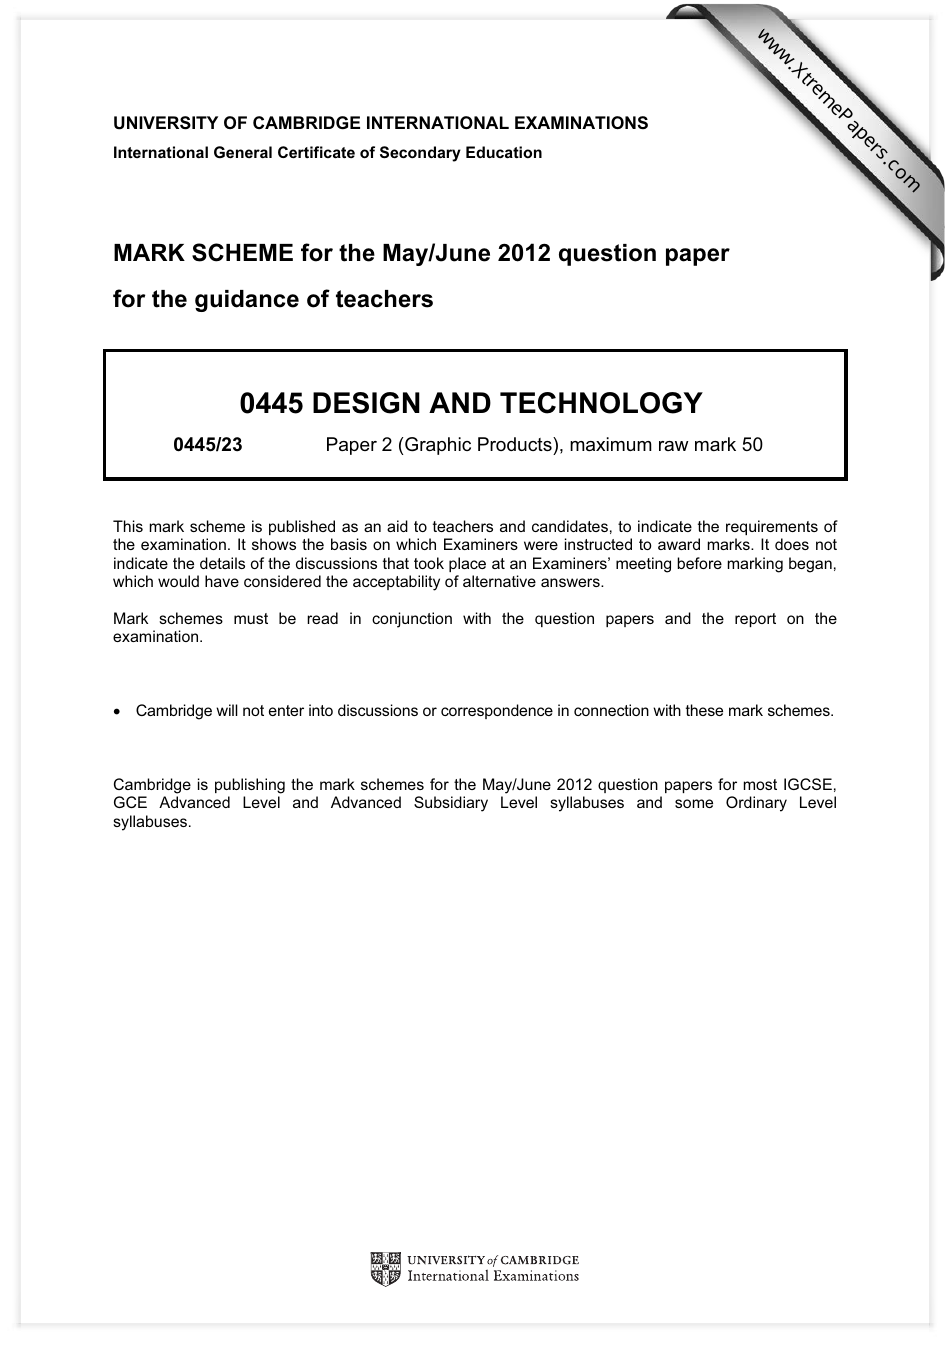 Design and Technology Mark Scheme - University of Cambridge International Examinations